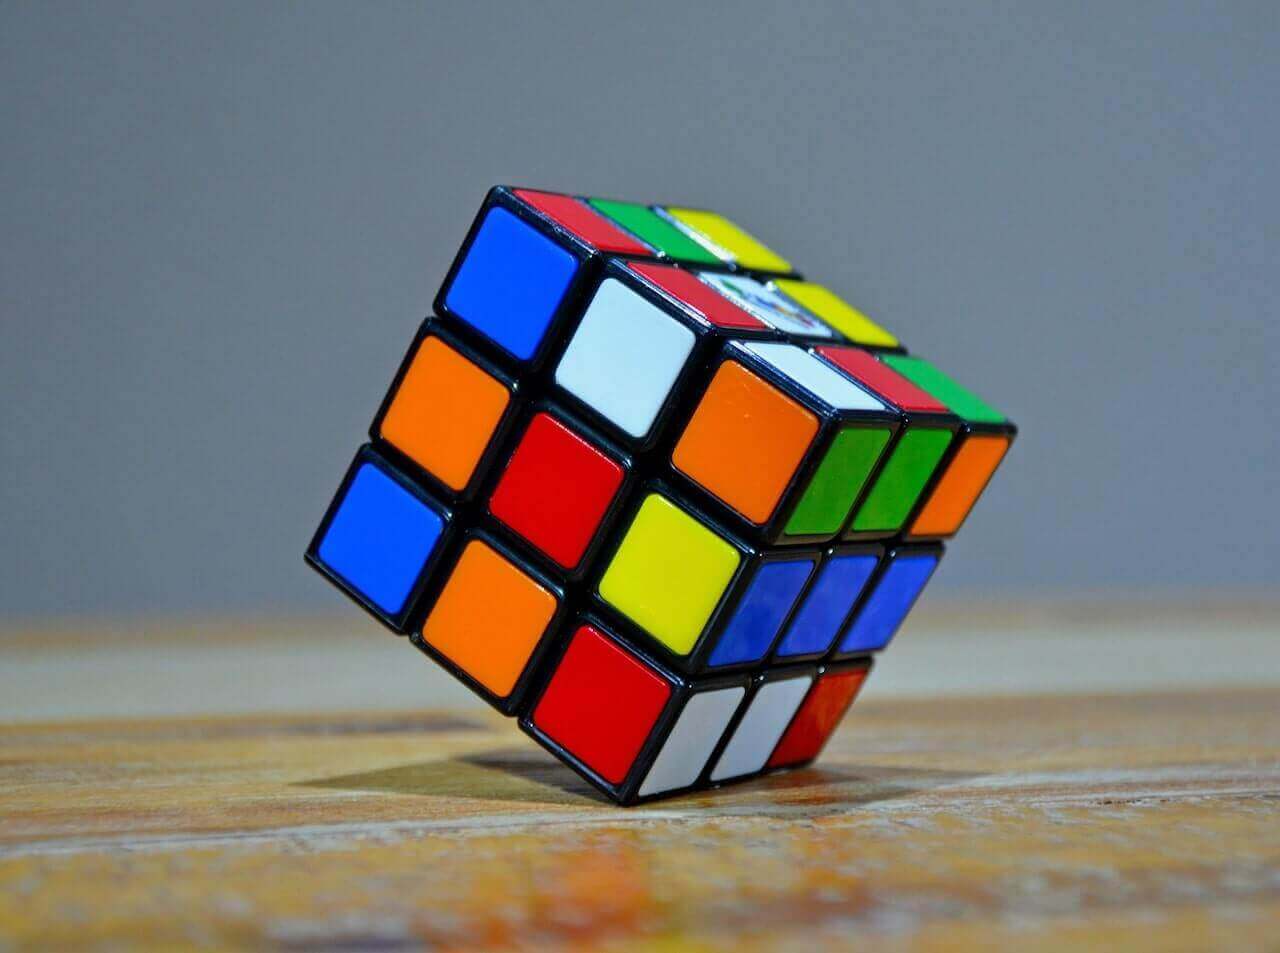 Rubik's cube benefits